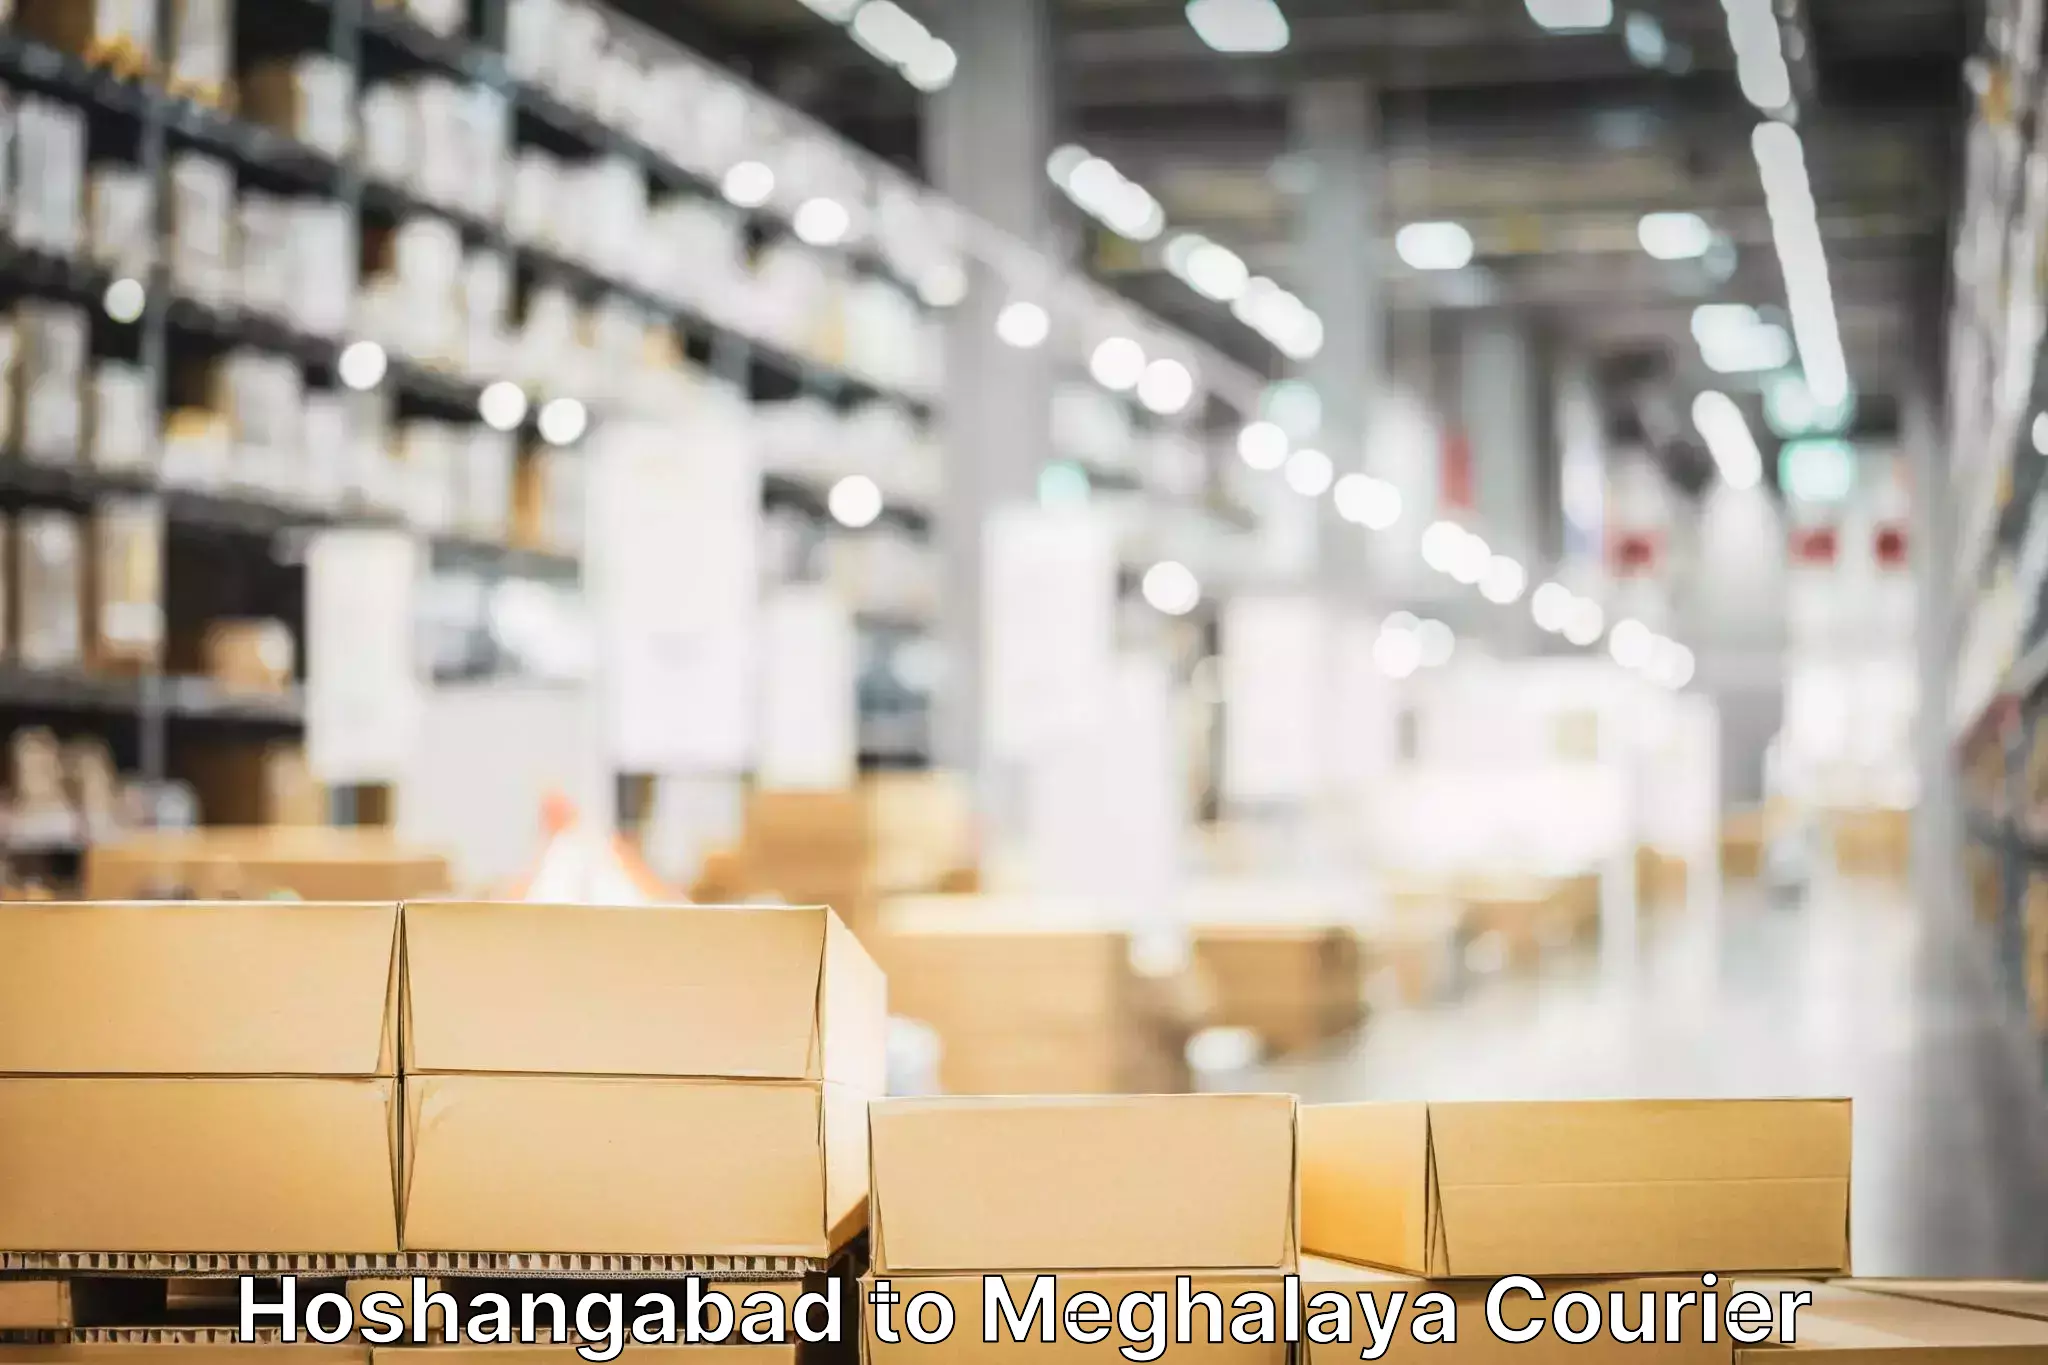 Global shipping networks Hoshangabad to Meghalaya